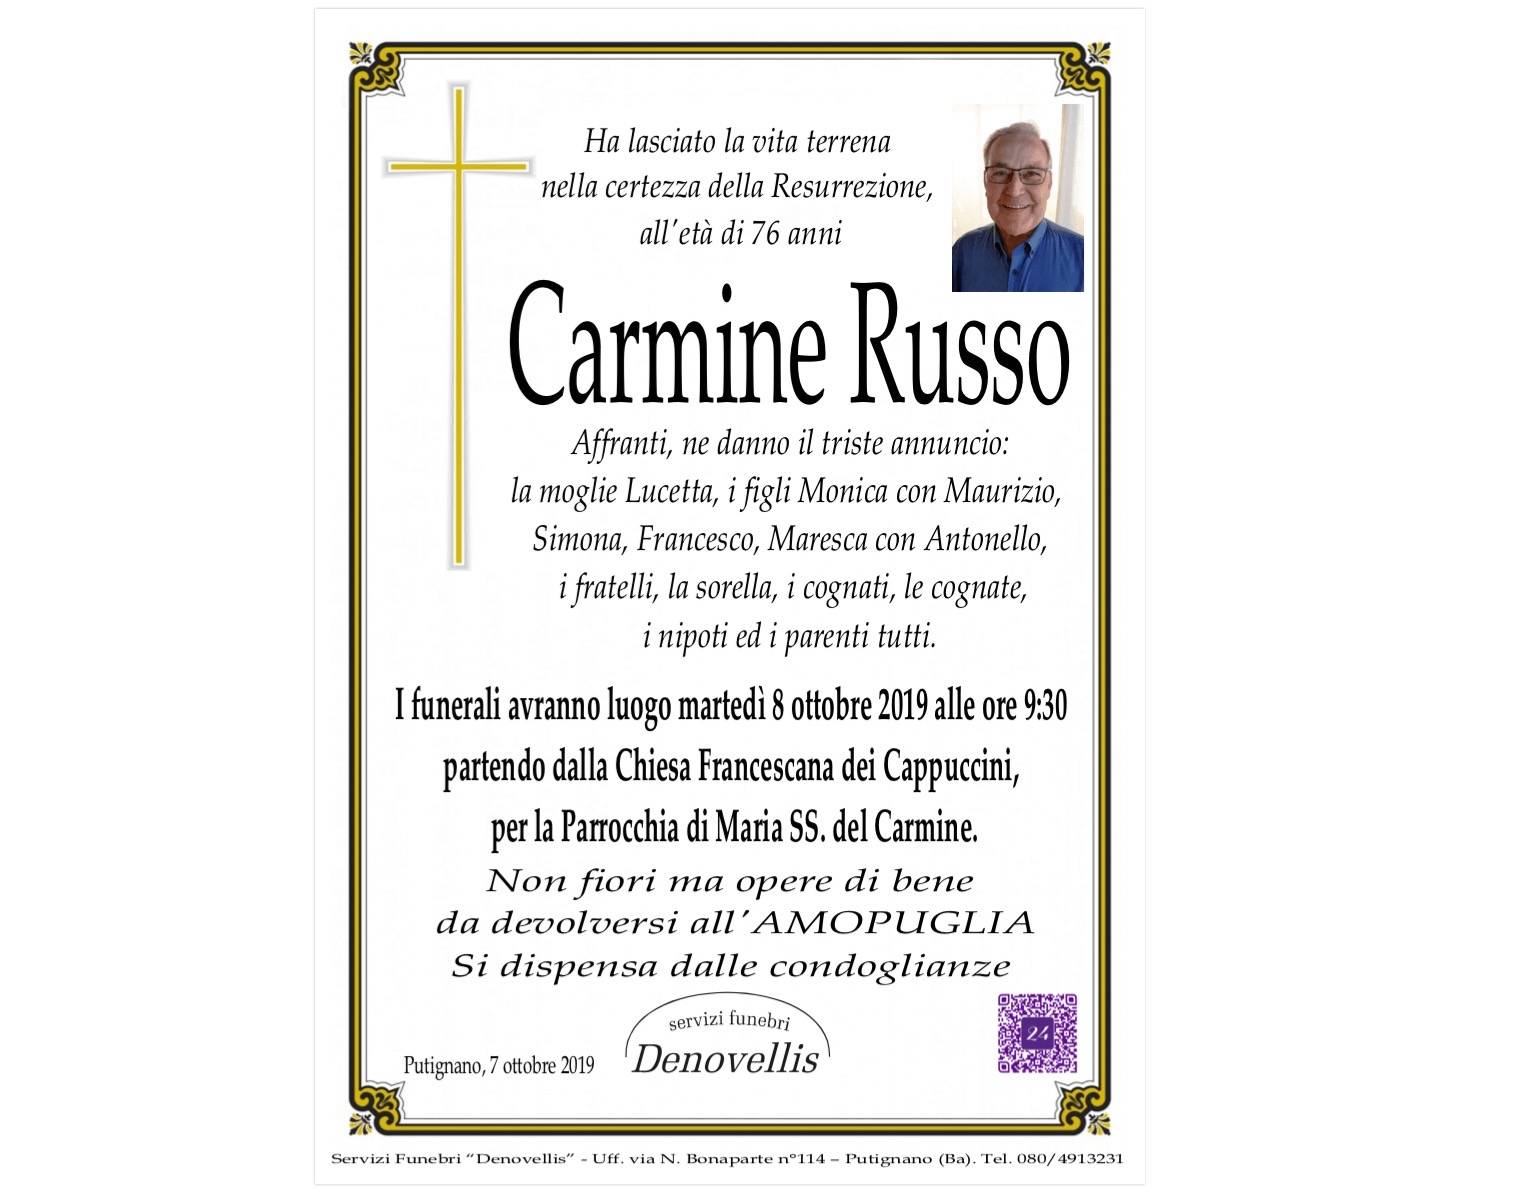 Carmine Russo